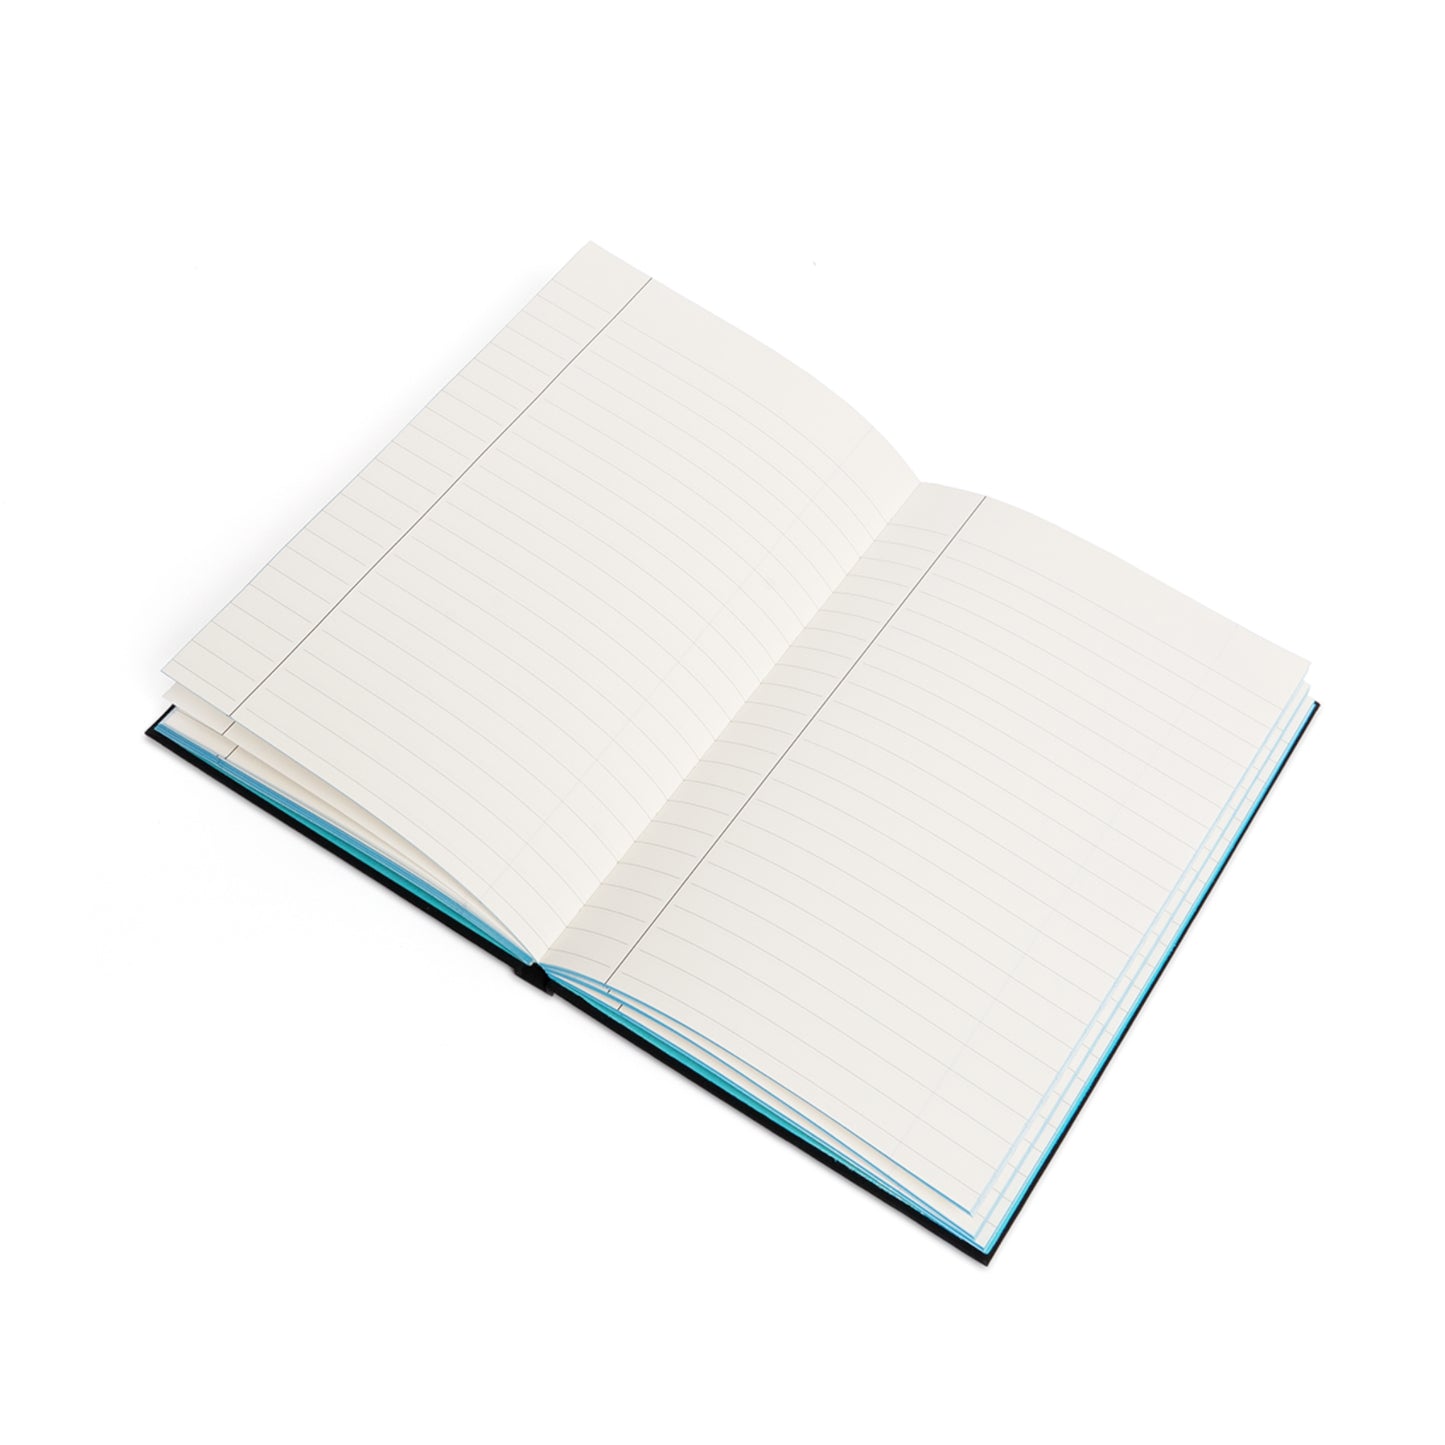 Tslack Express Color Contrast Notebook - Ruled